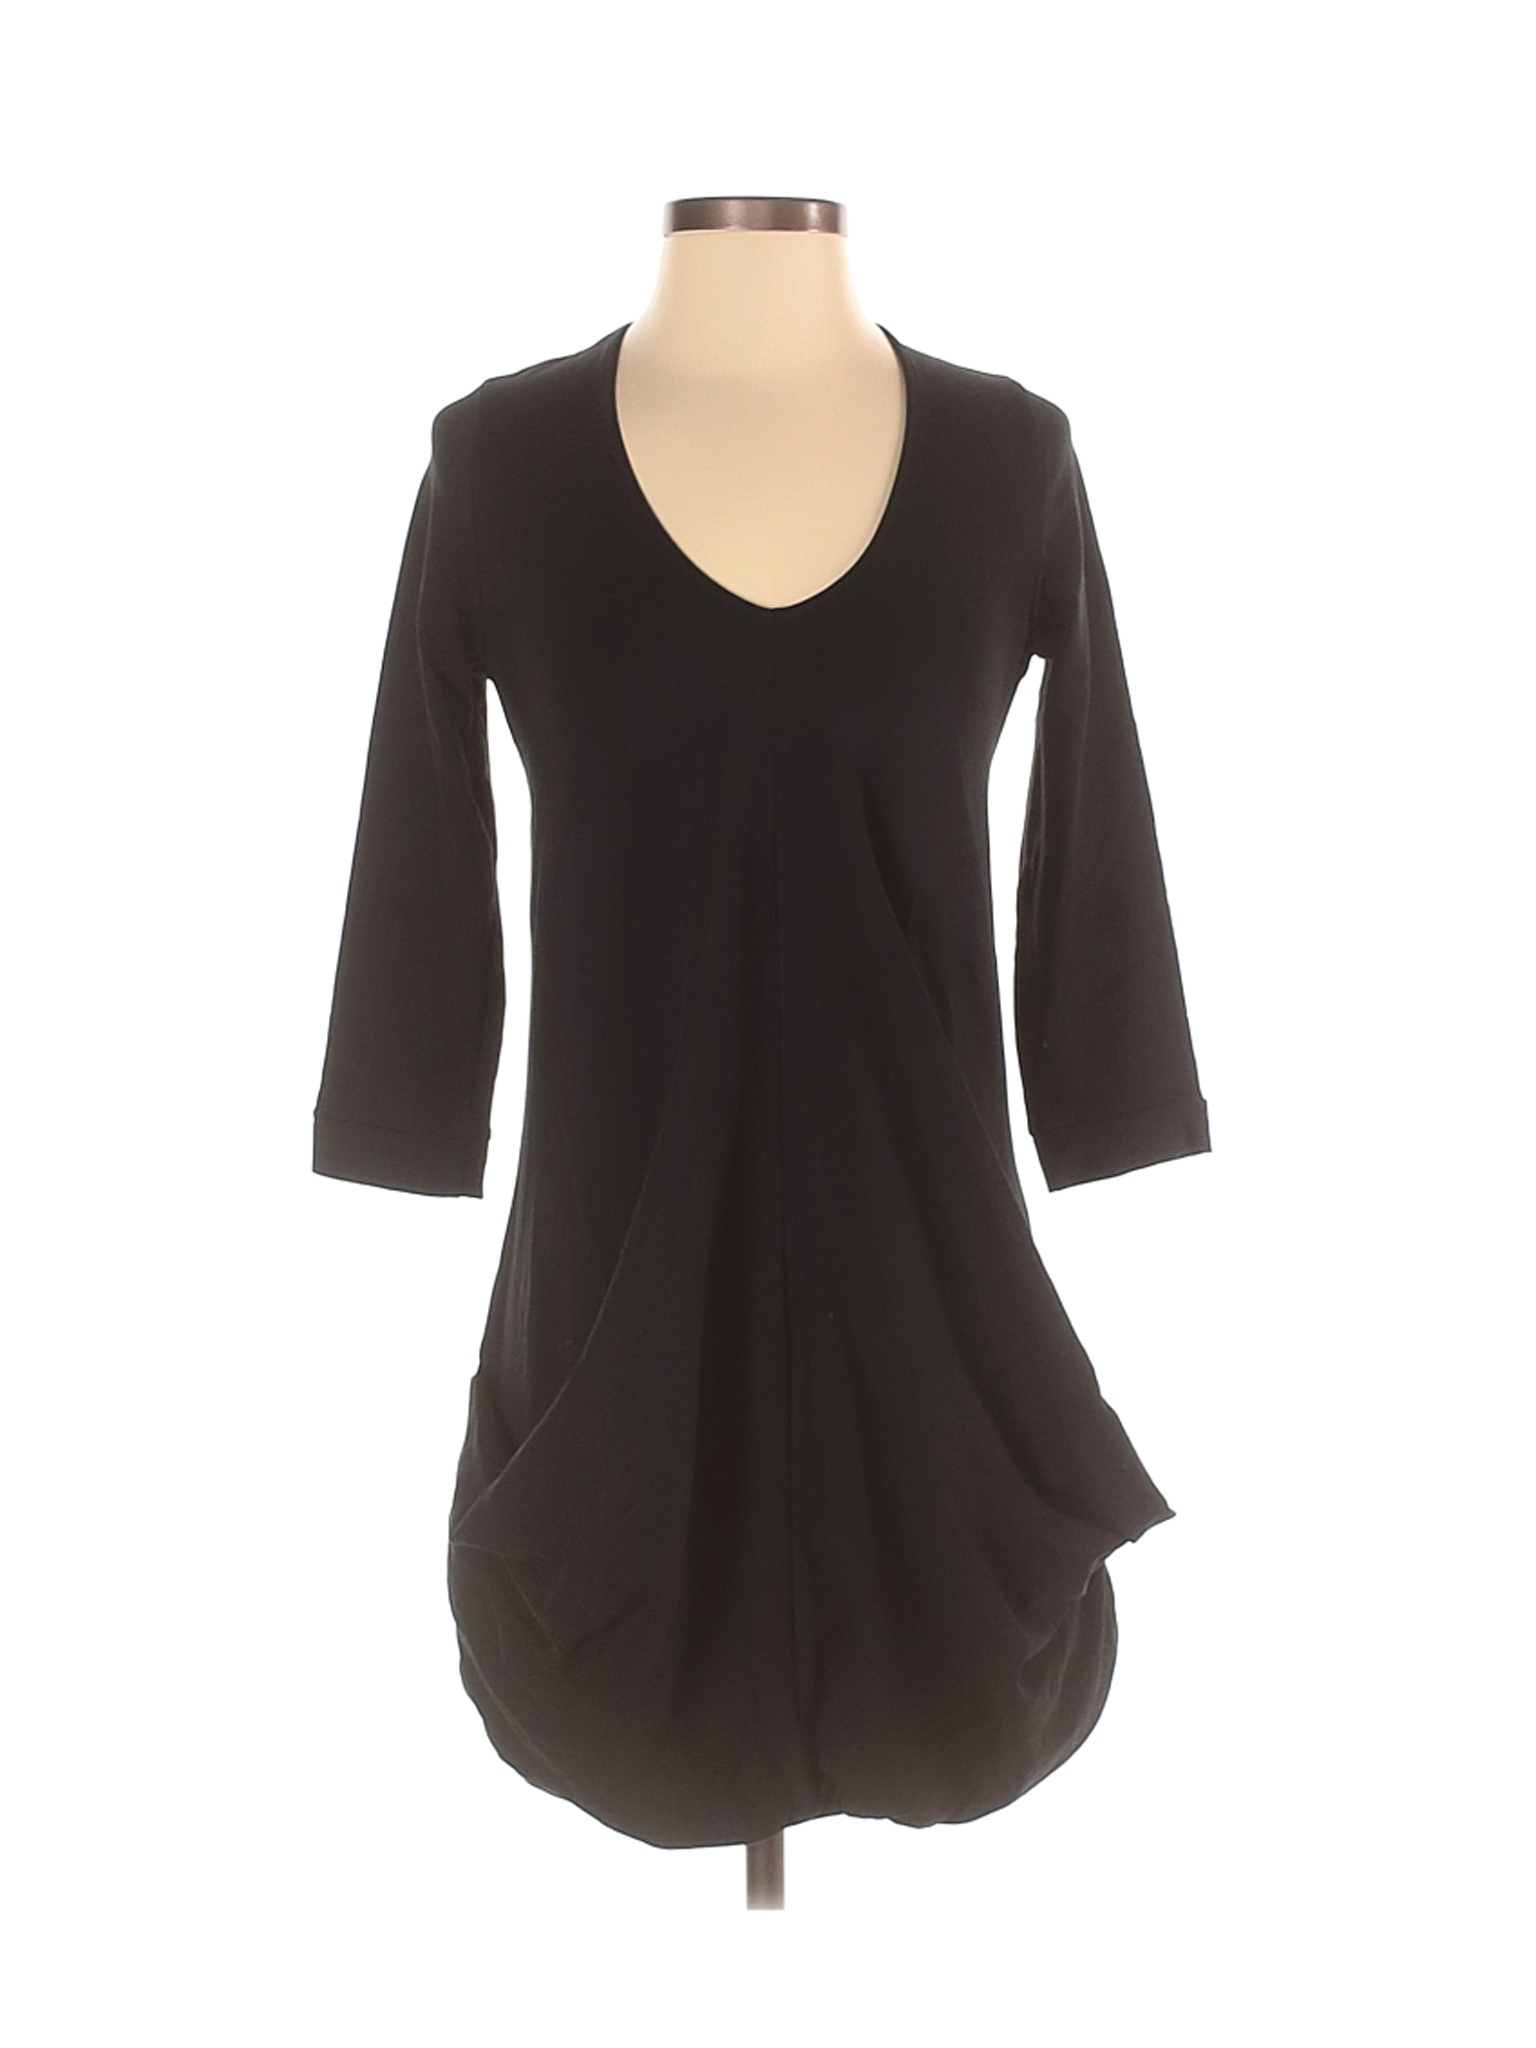 NWT Anne Fontaine Women Black Casual Dress 36 eur | eBay